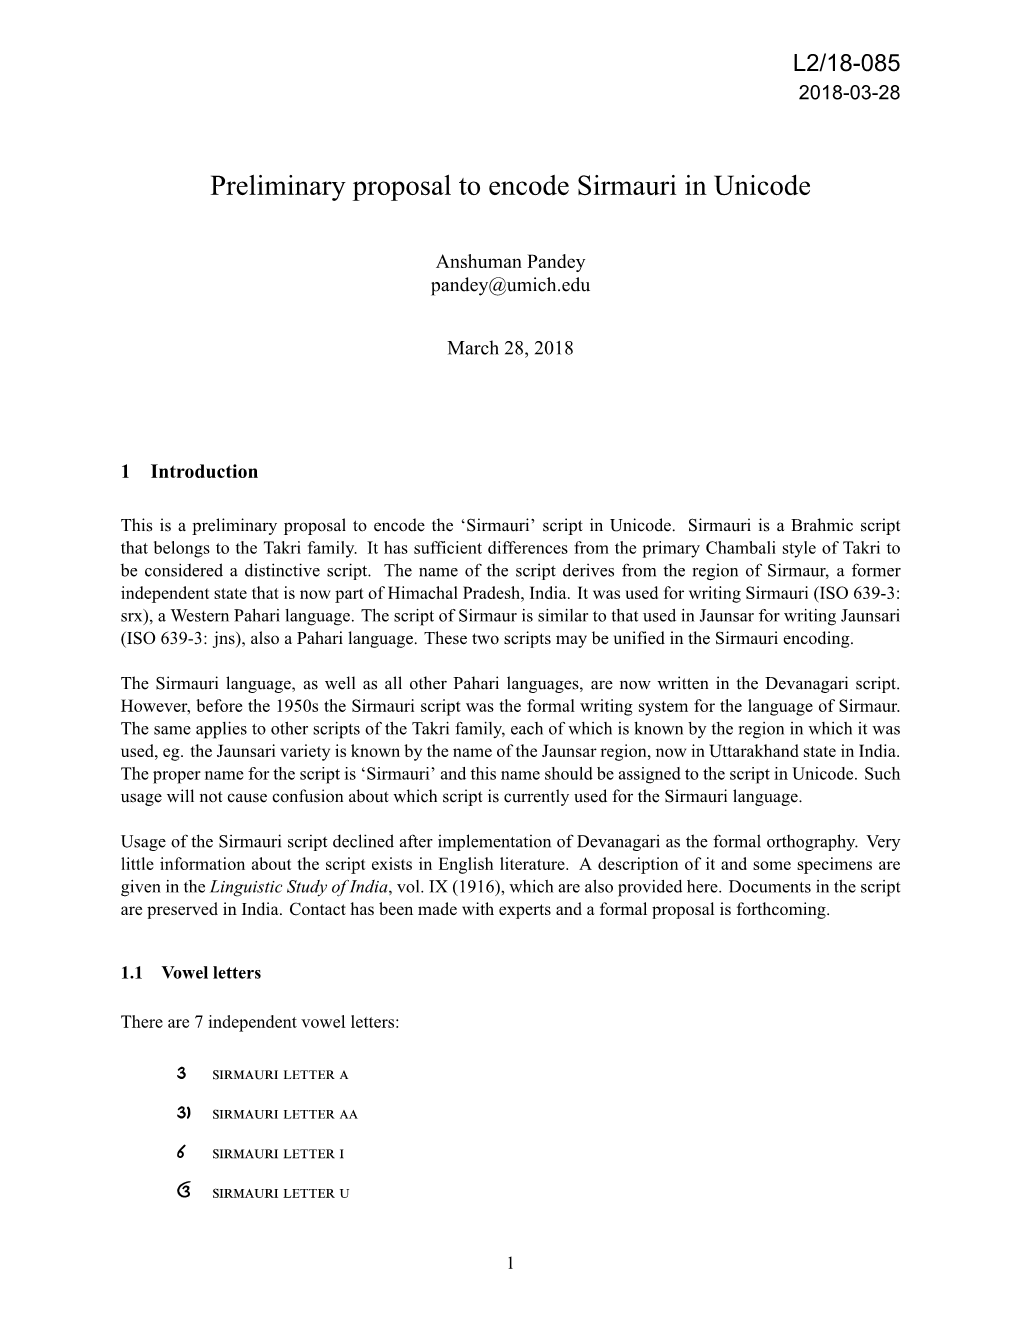 Preliminary Proposal to Encode Sirmauri in Unicode